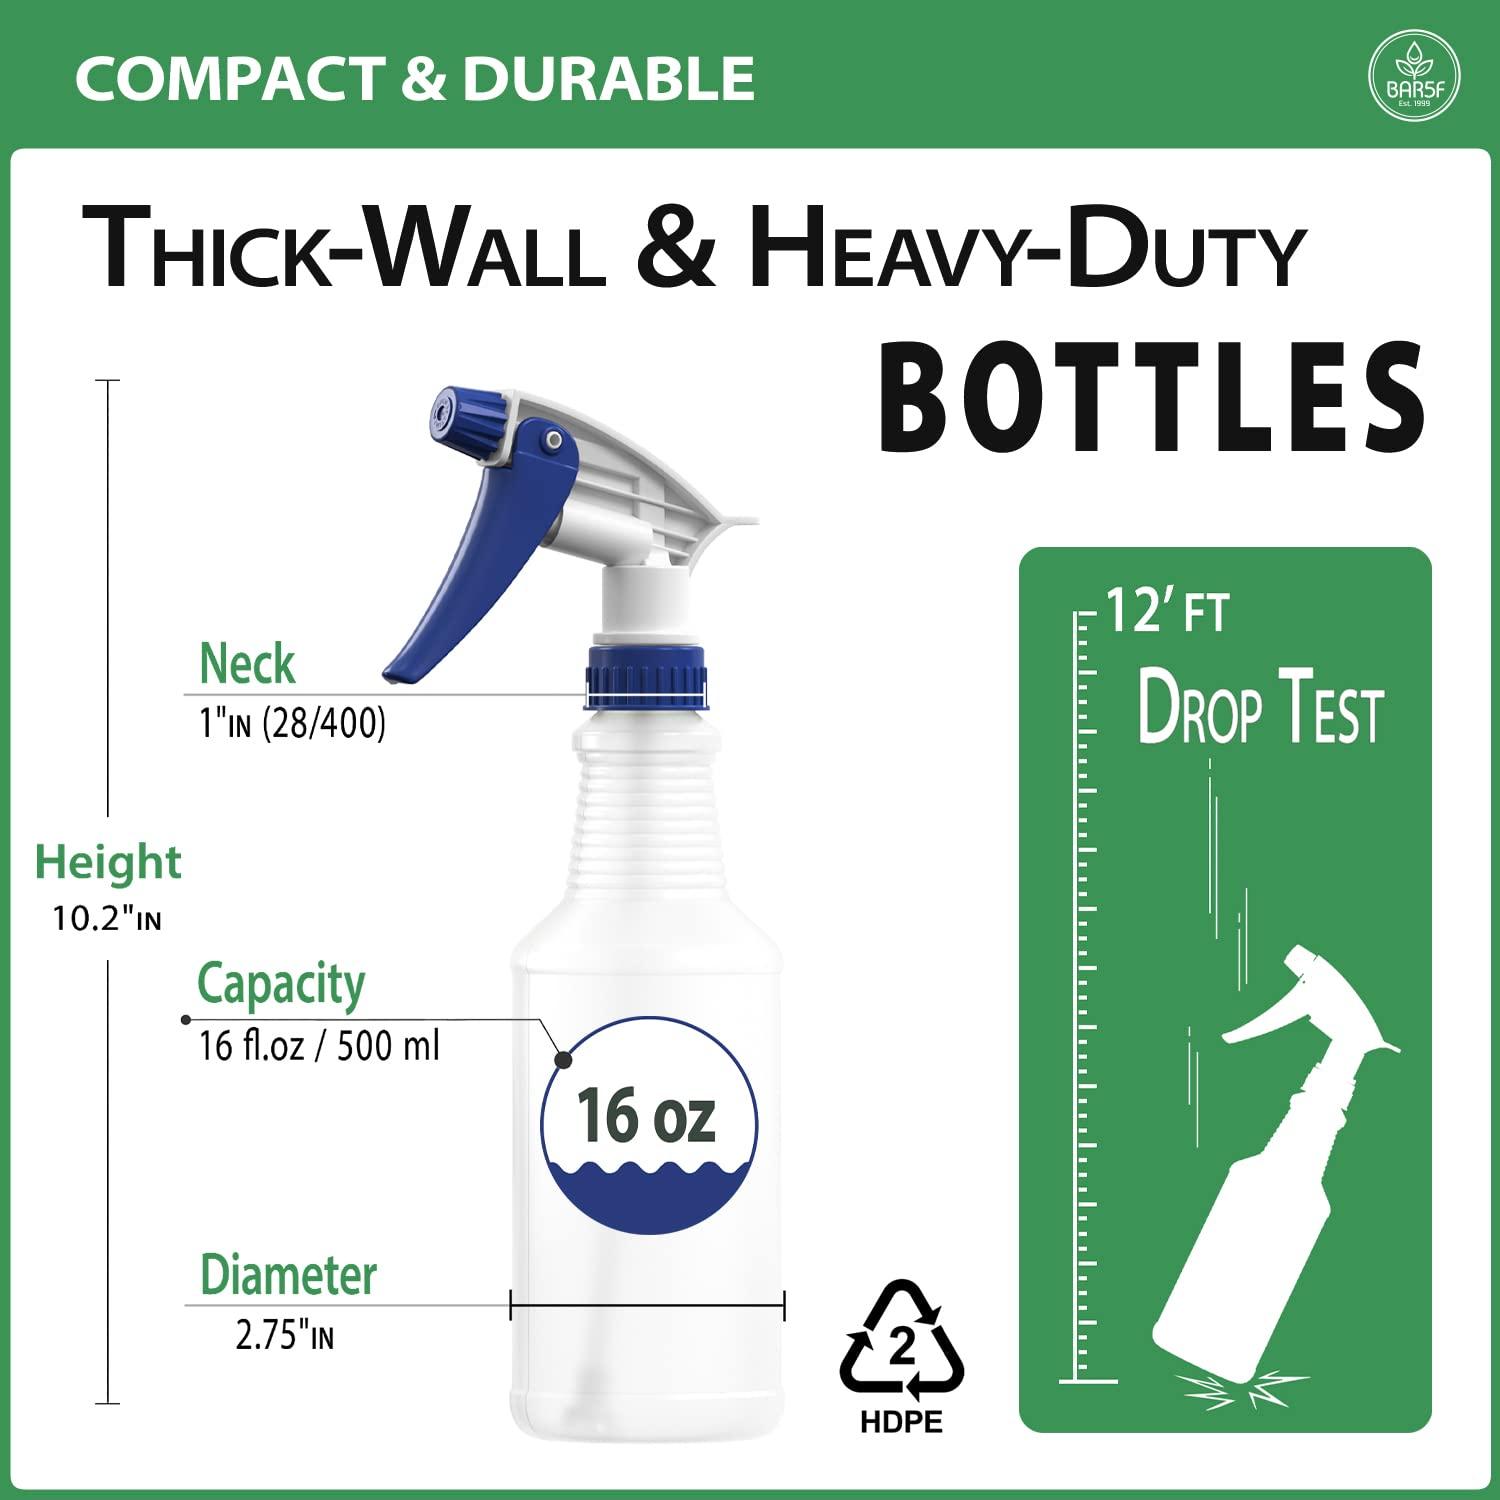 all-purpose spray bottles-natural hdpe plastic sprayer-industrial